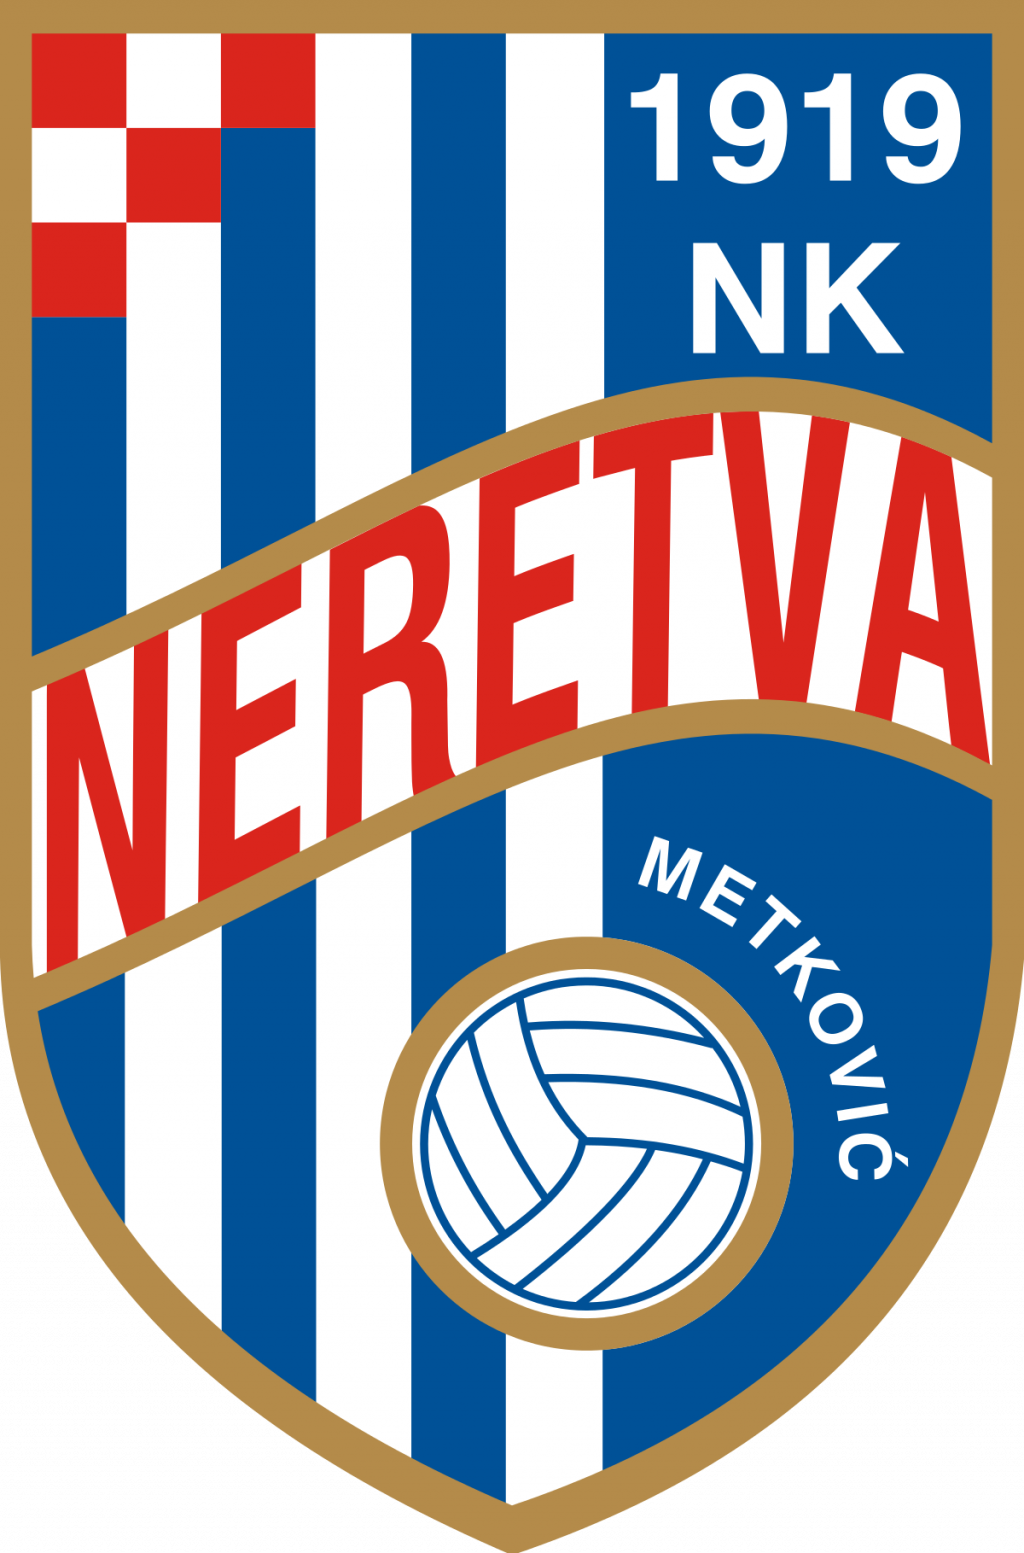 &lt;p&gt;Nogometni klub Neretva (Metković)&lt;/p&gt;